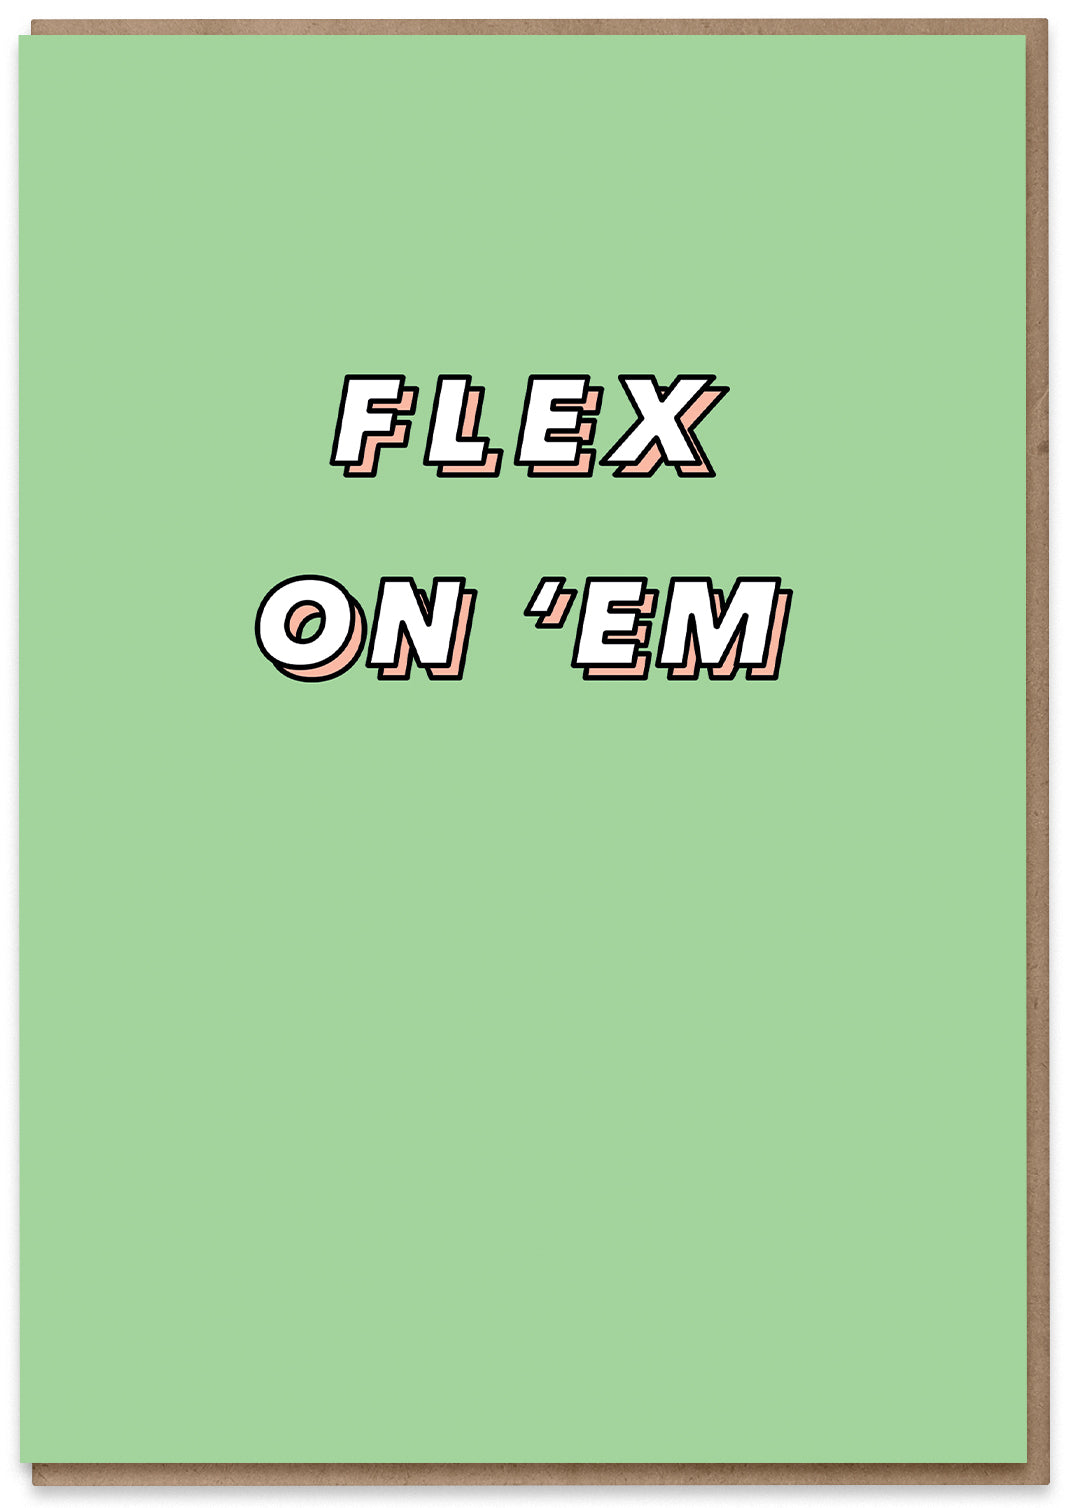 Flex on 'Em